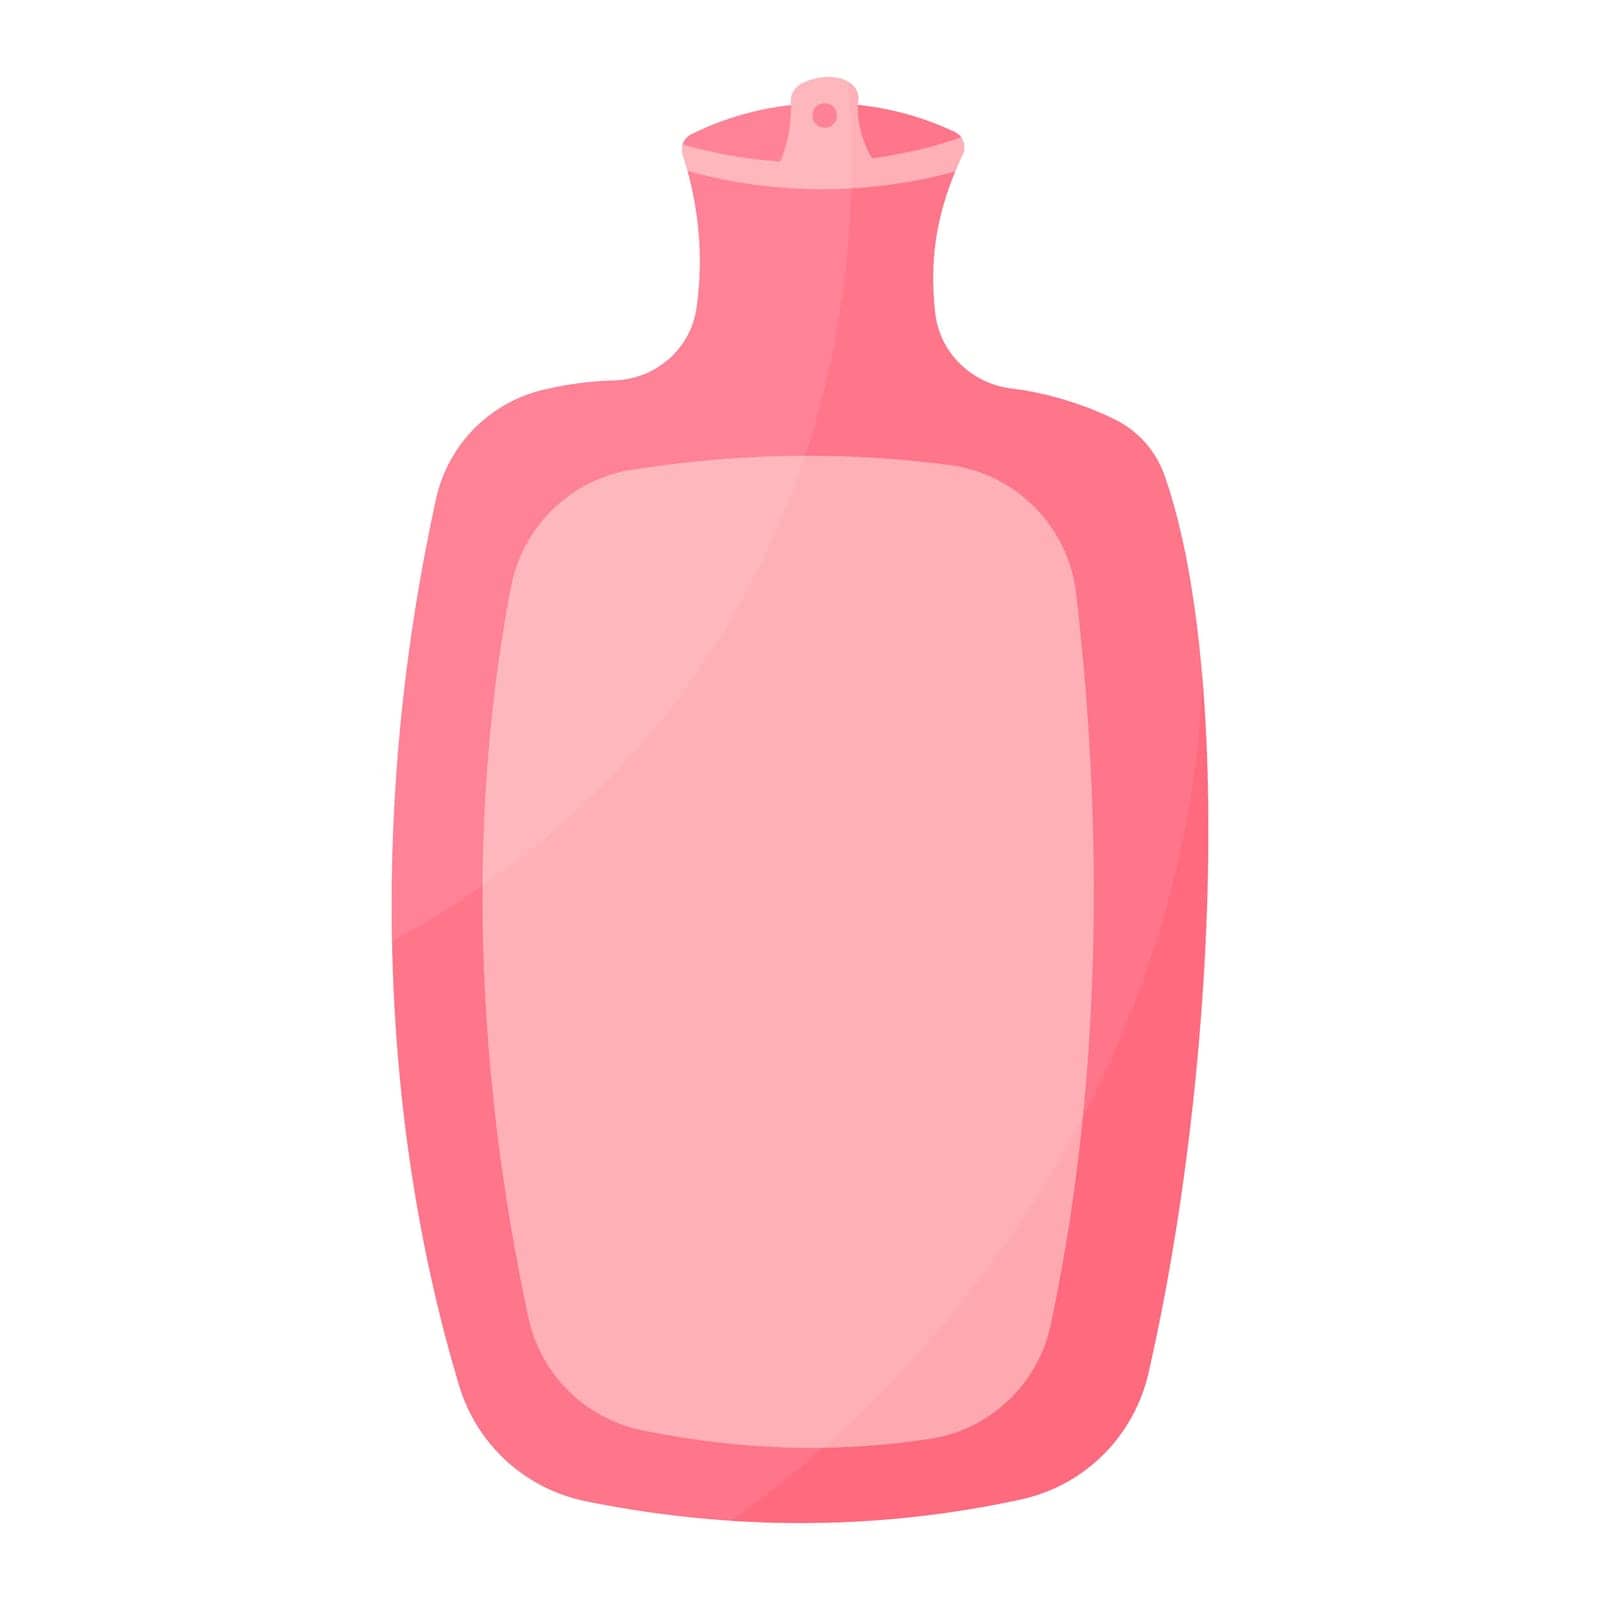 hot water bottle menstruation spasm woman period by kristushka_15_108